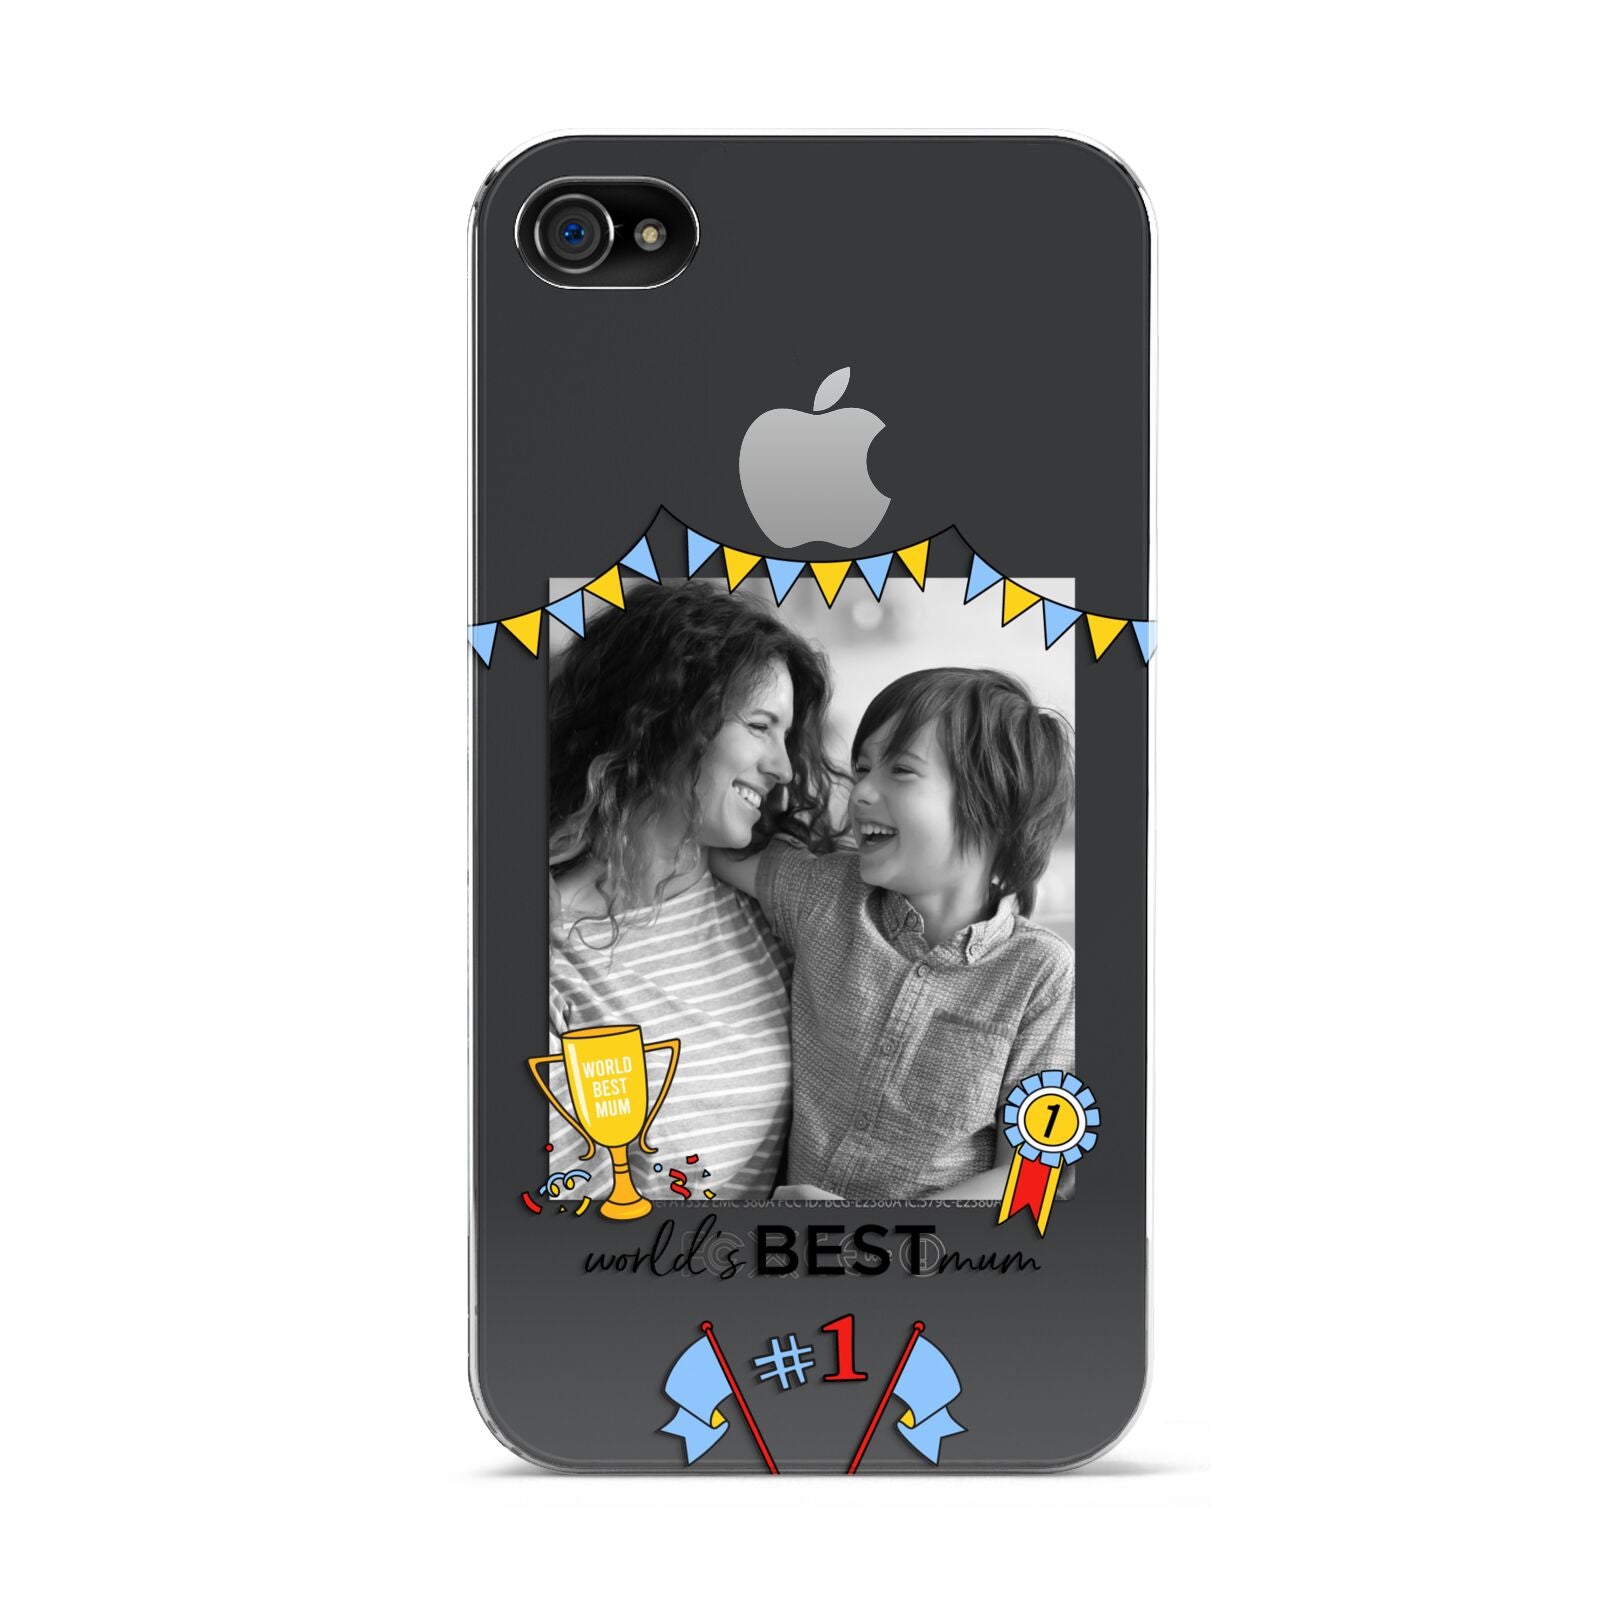 Worlds Best Mum Apple iPhone 4s Case